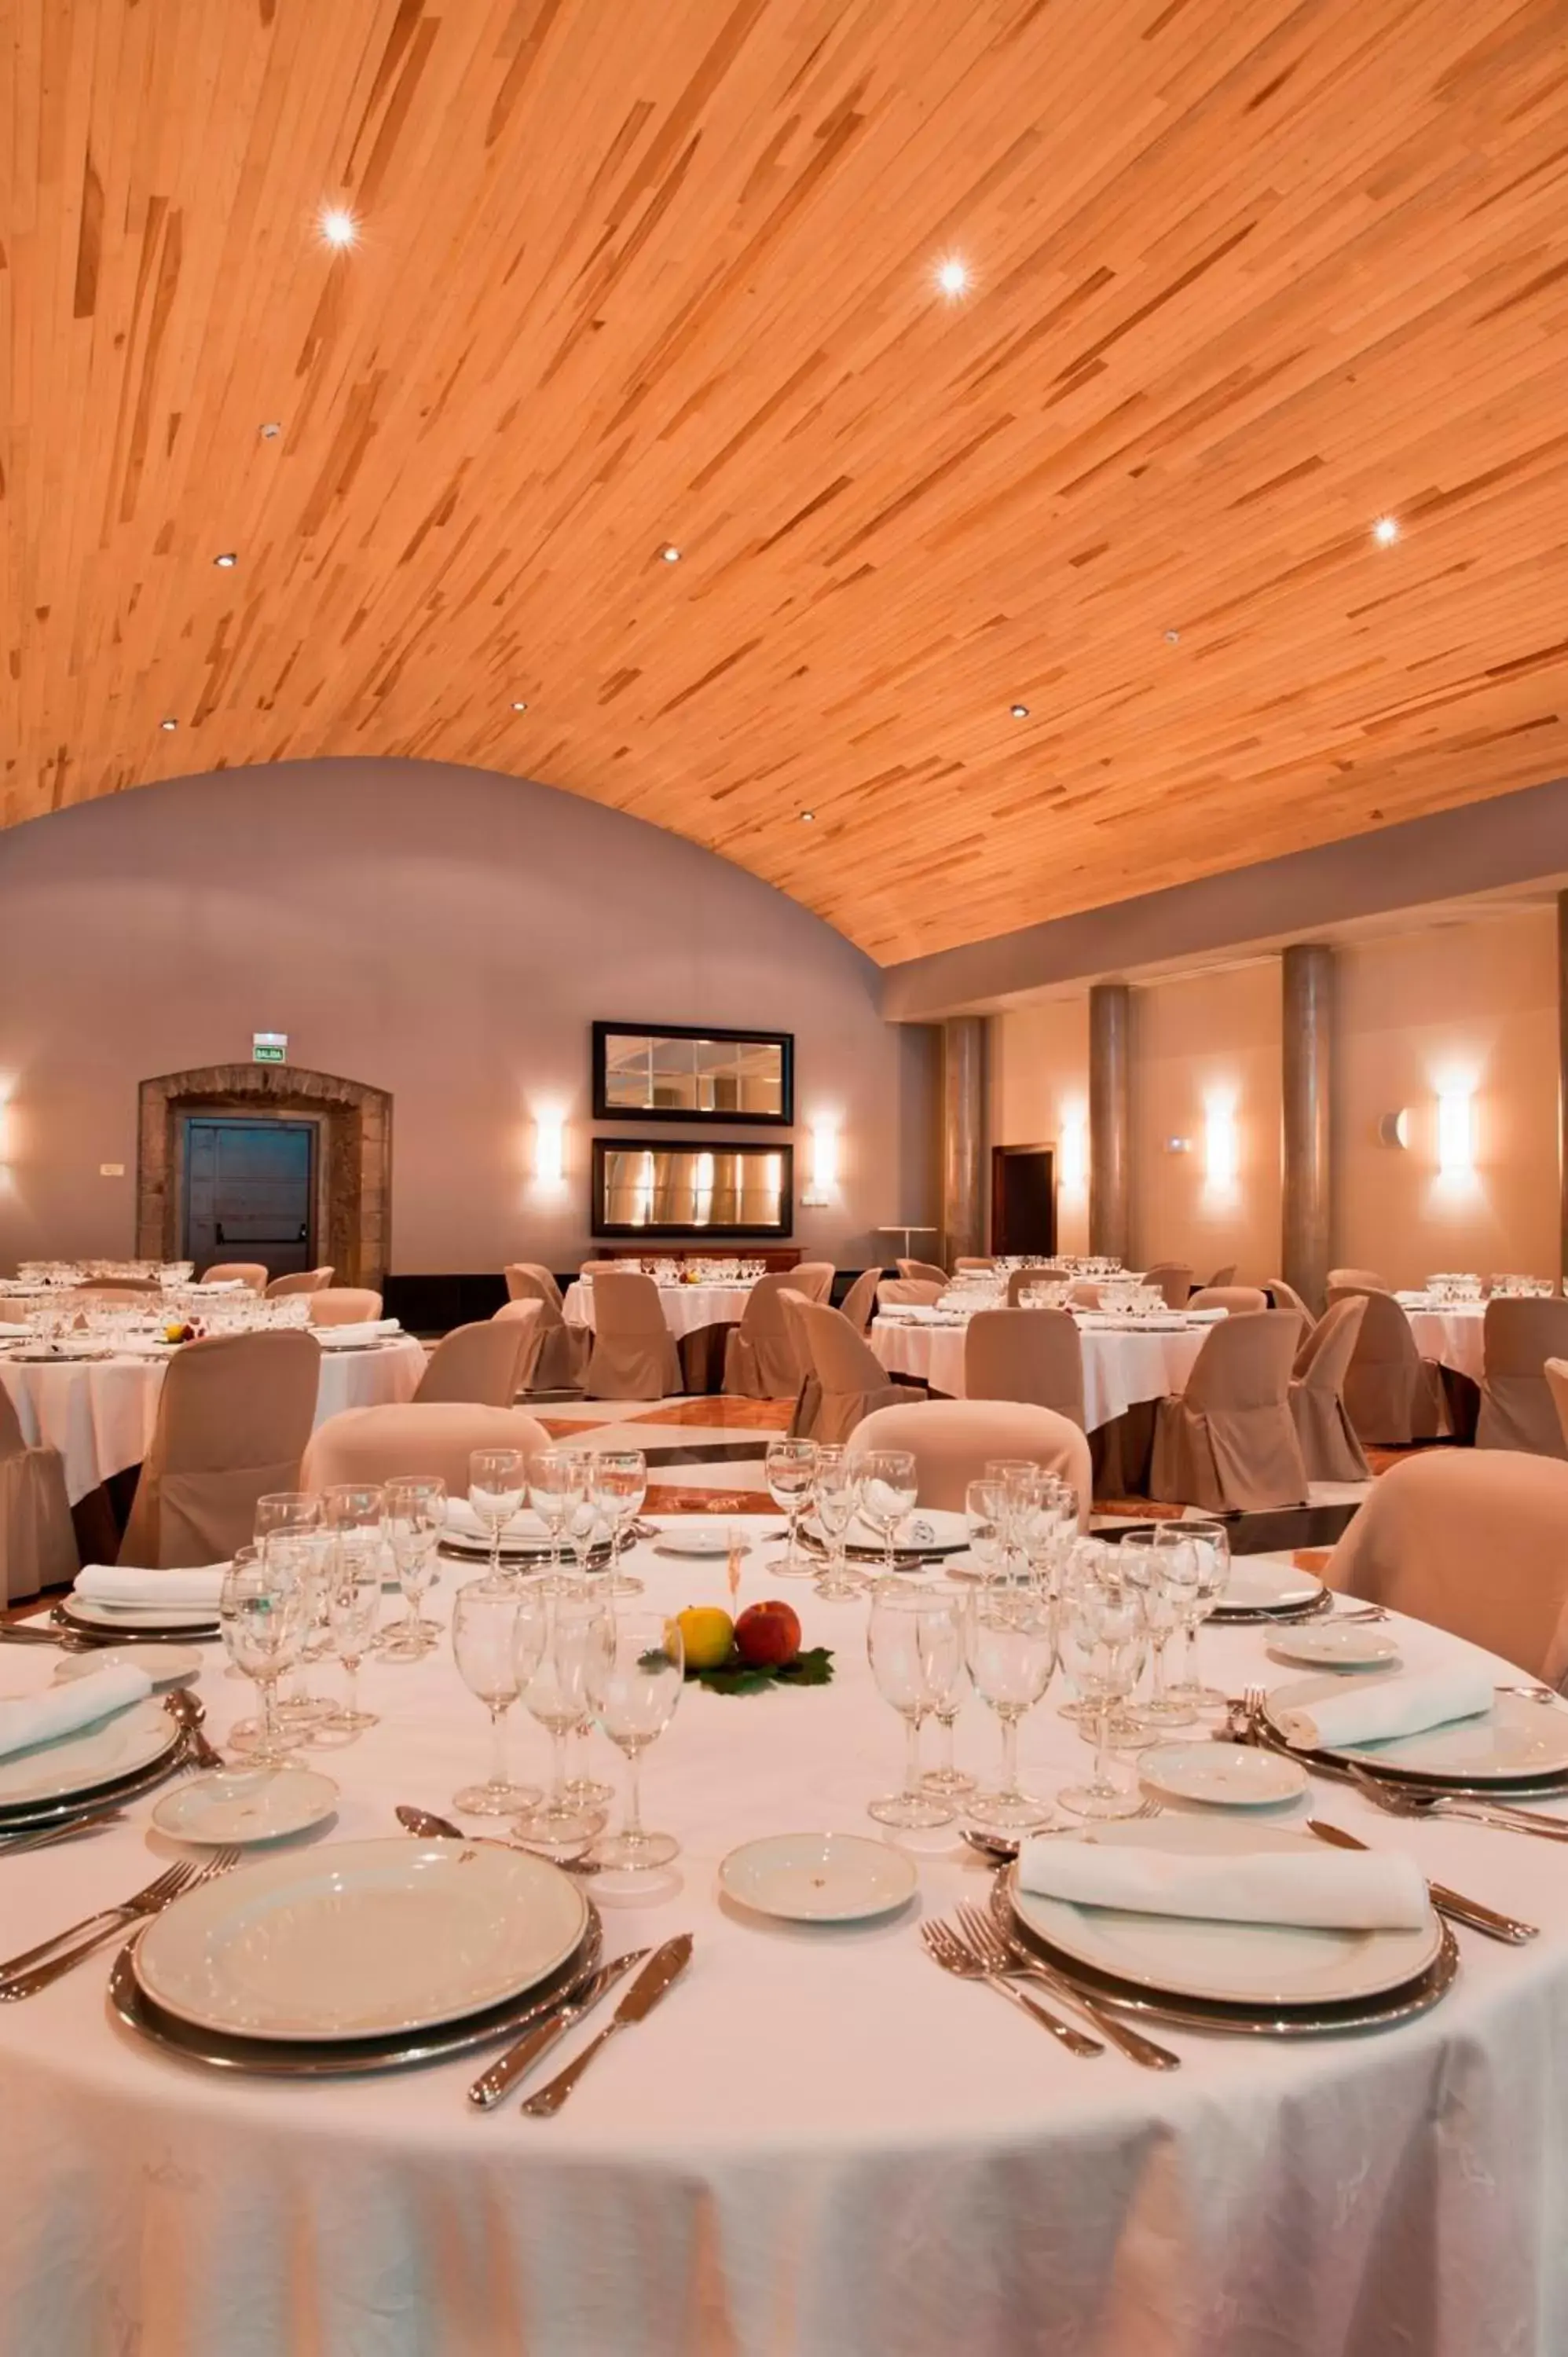 Banquet/Function facilities, Restaurant/Places to Eat in Parador de Corias